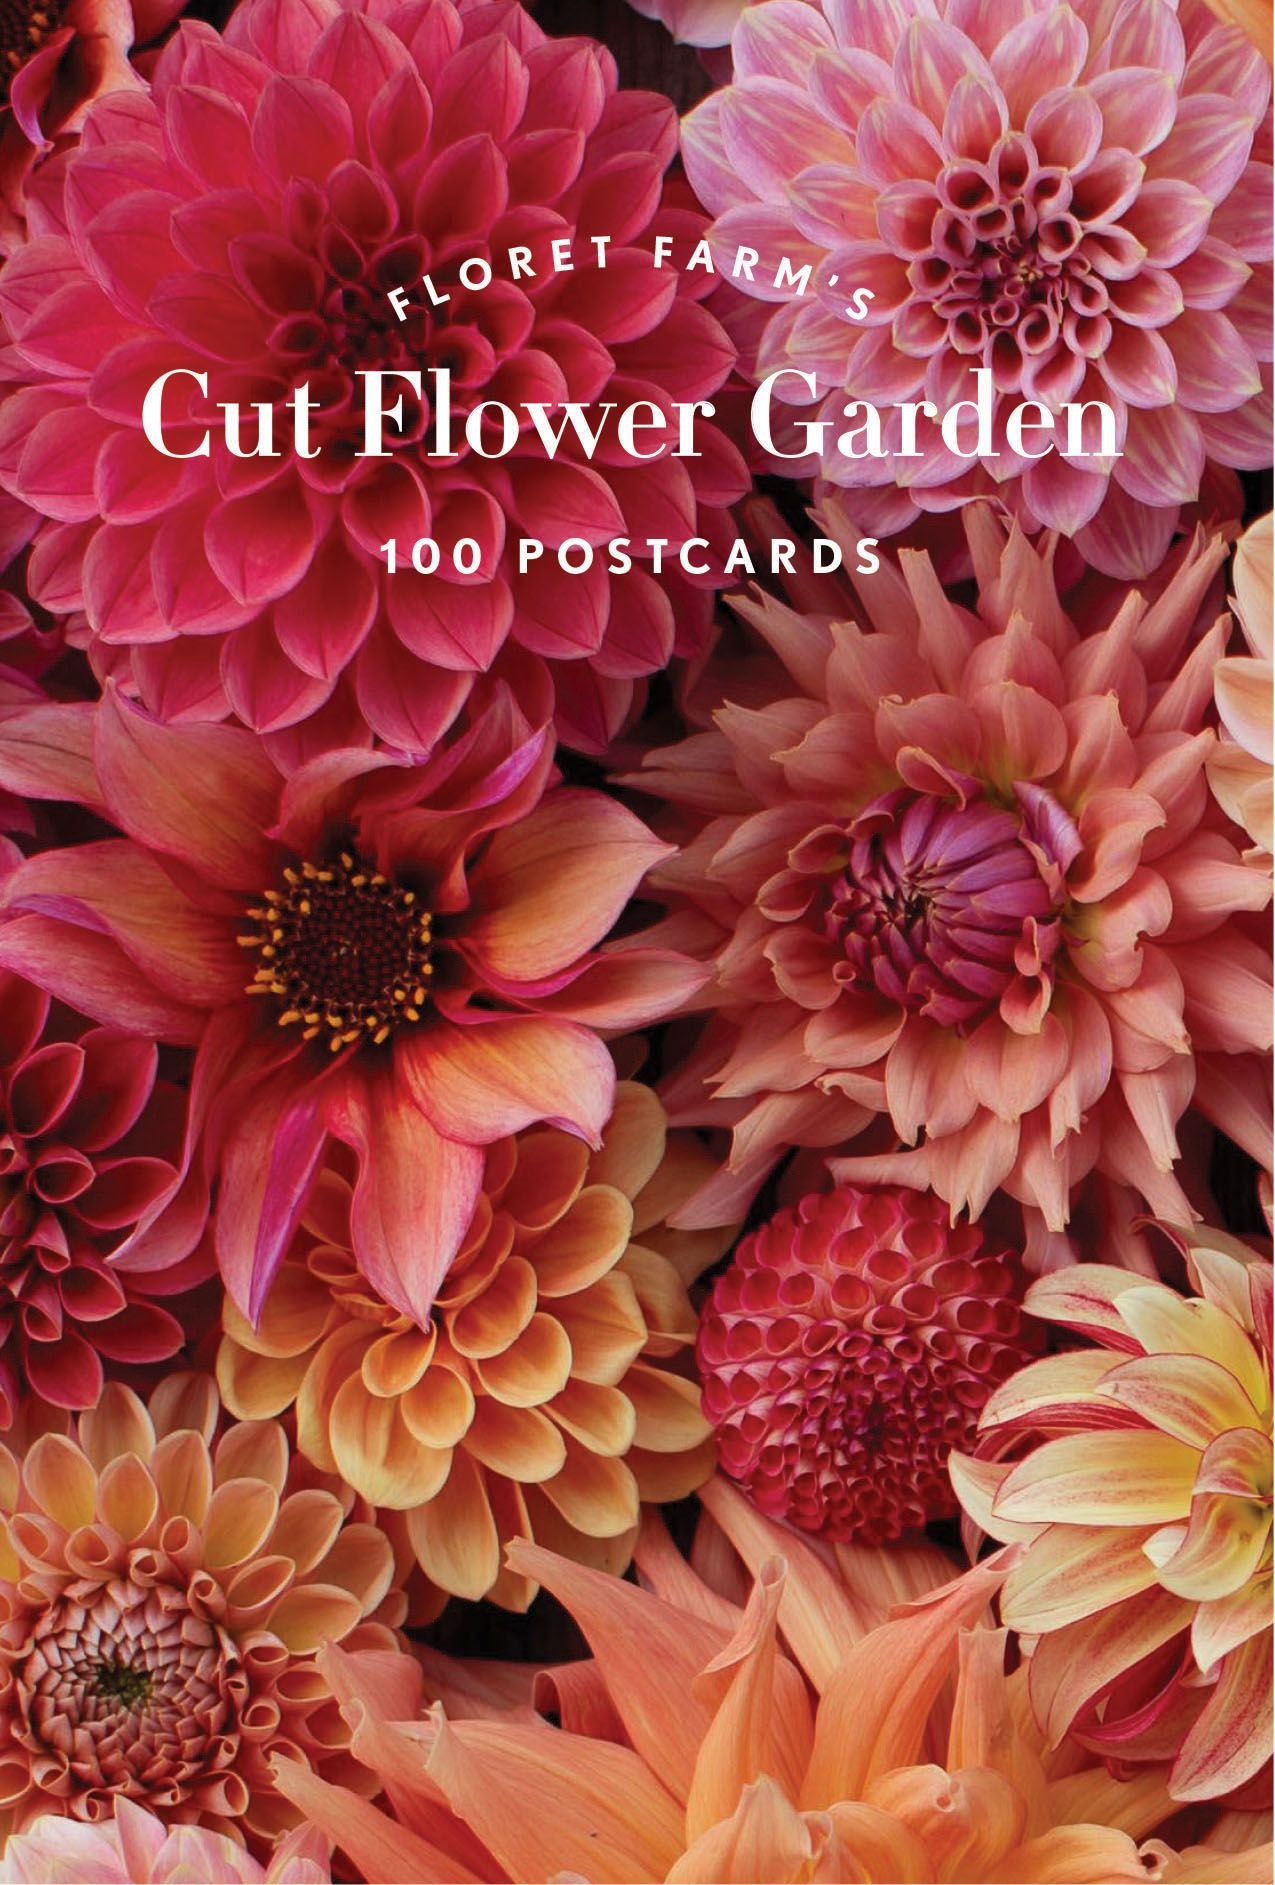 floret farm's cut flower garden 100 postcards by erin benzakein (postcard  book or pack)